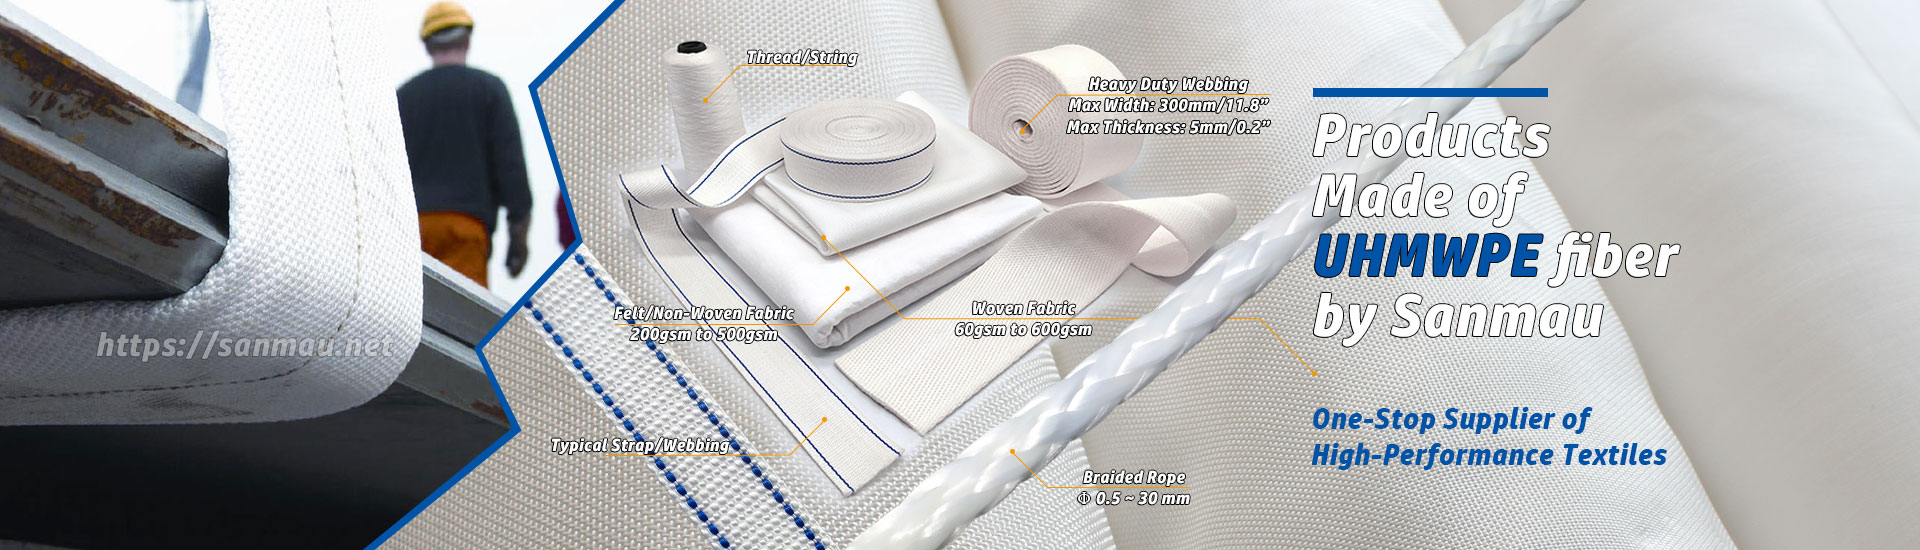 uhmwpe fiber textile products manufacturer